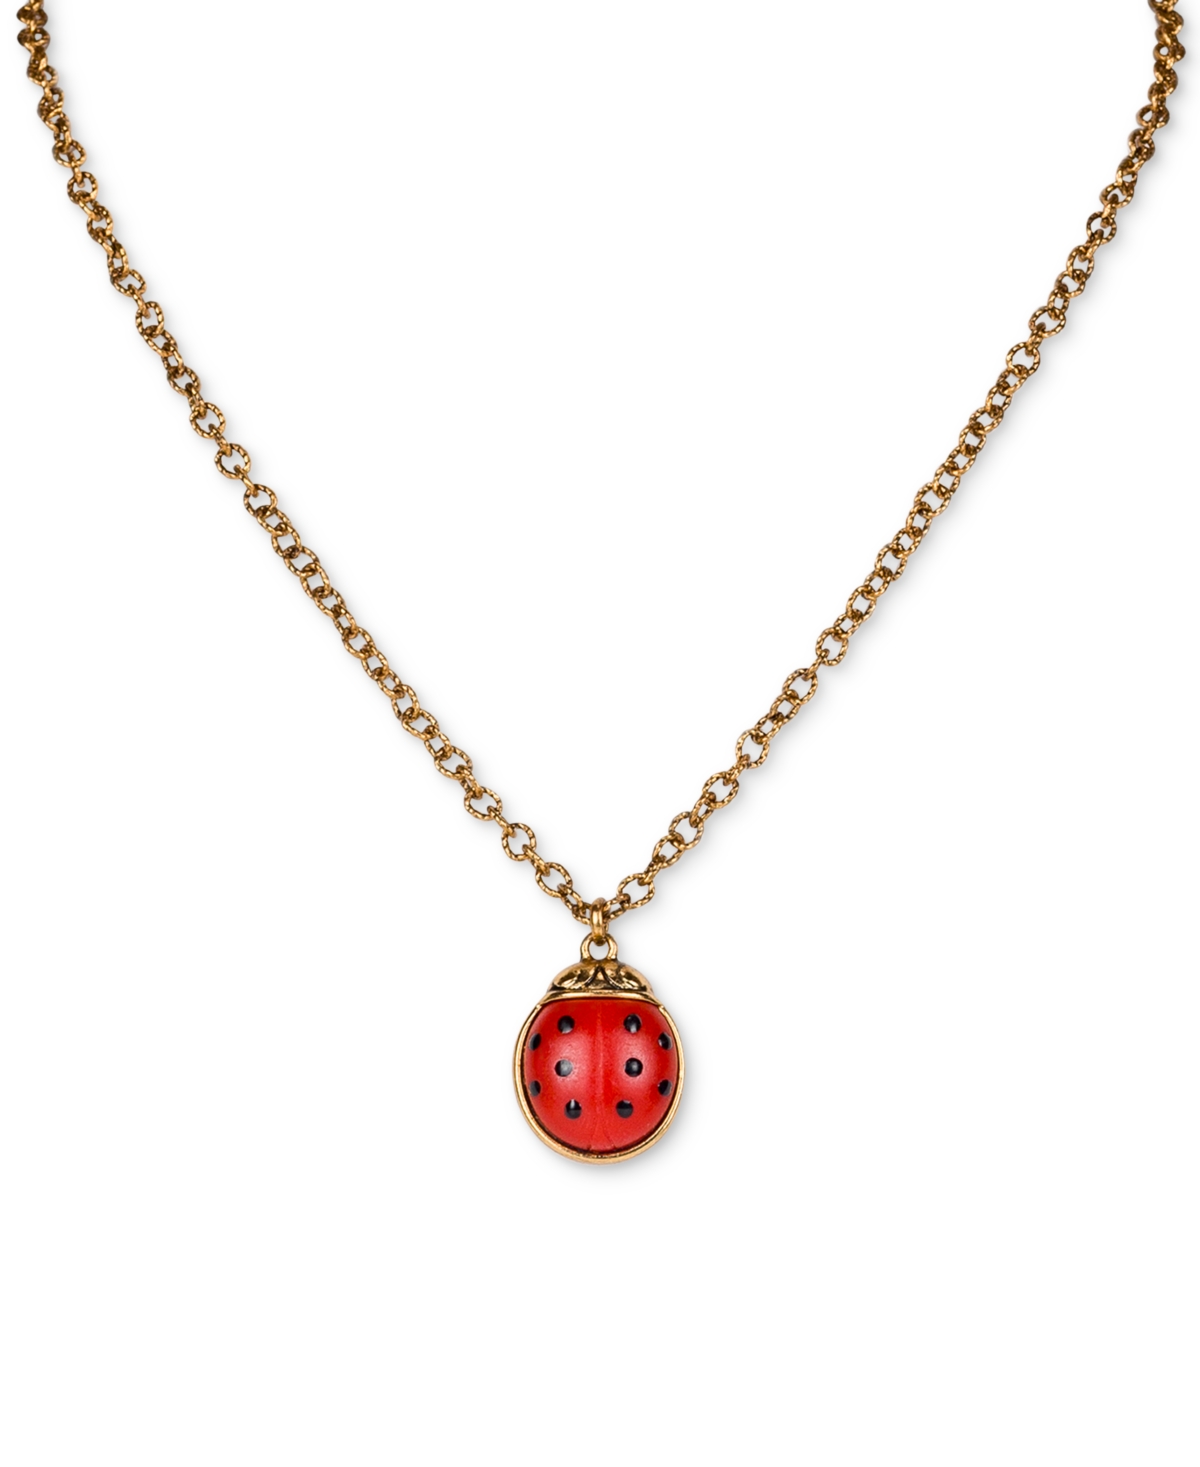 Gold-Tone Red Ladybug Pendant Necklace, 19" + 3" extender - Antique Go